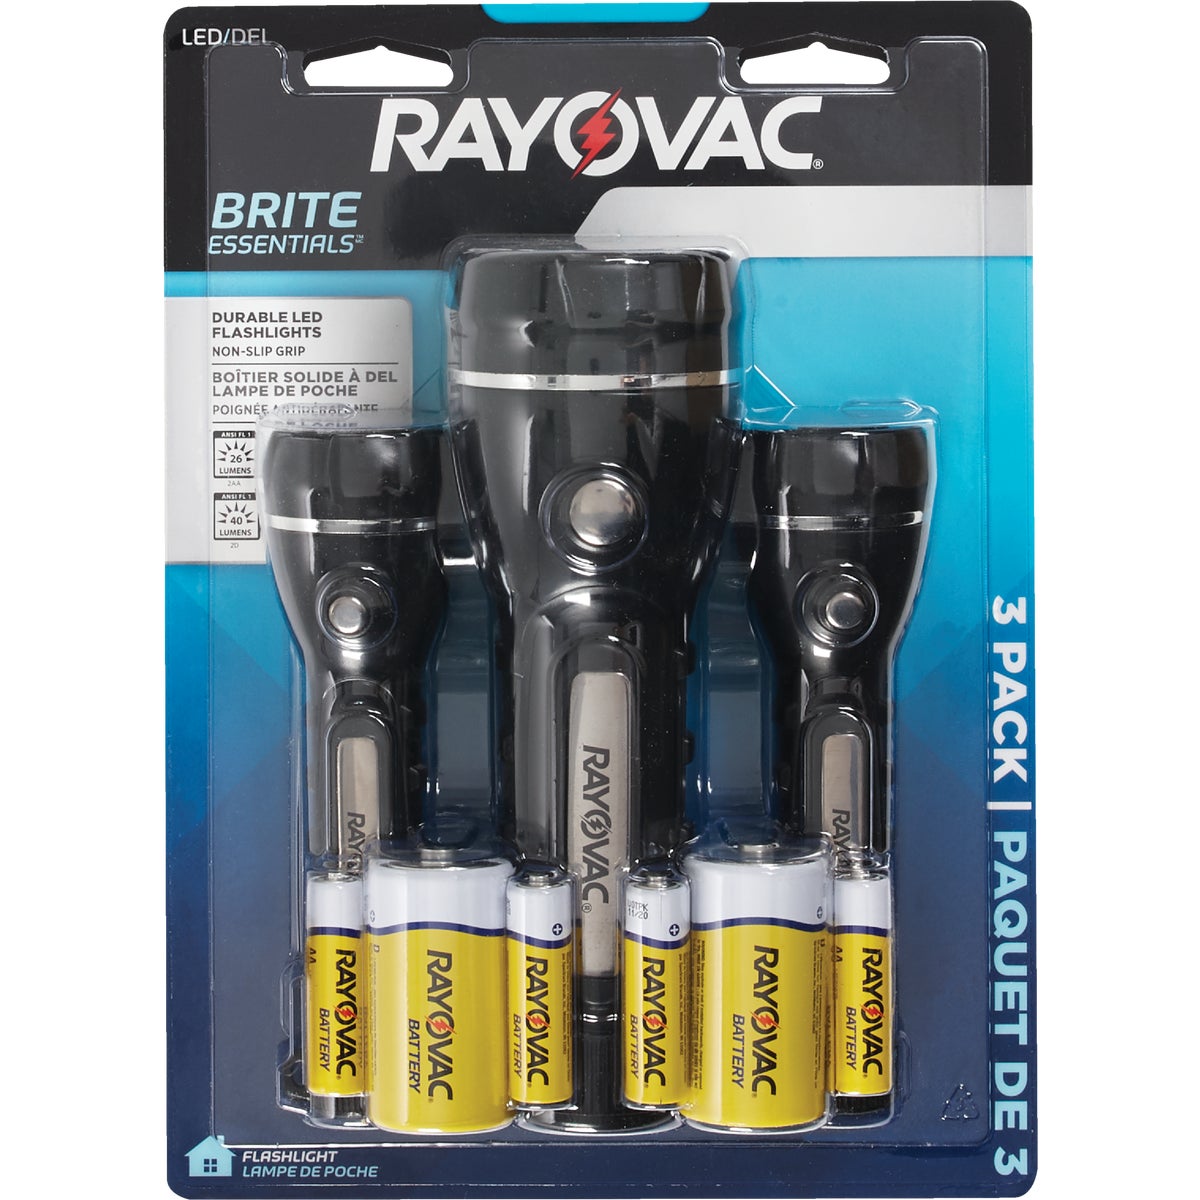 Rayovac Bright Essentials Rubber LED Flashlight